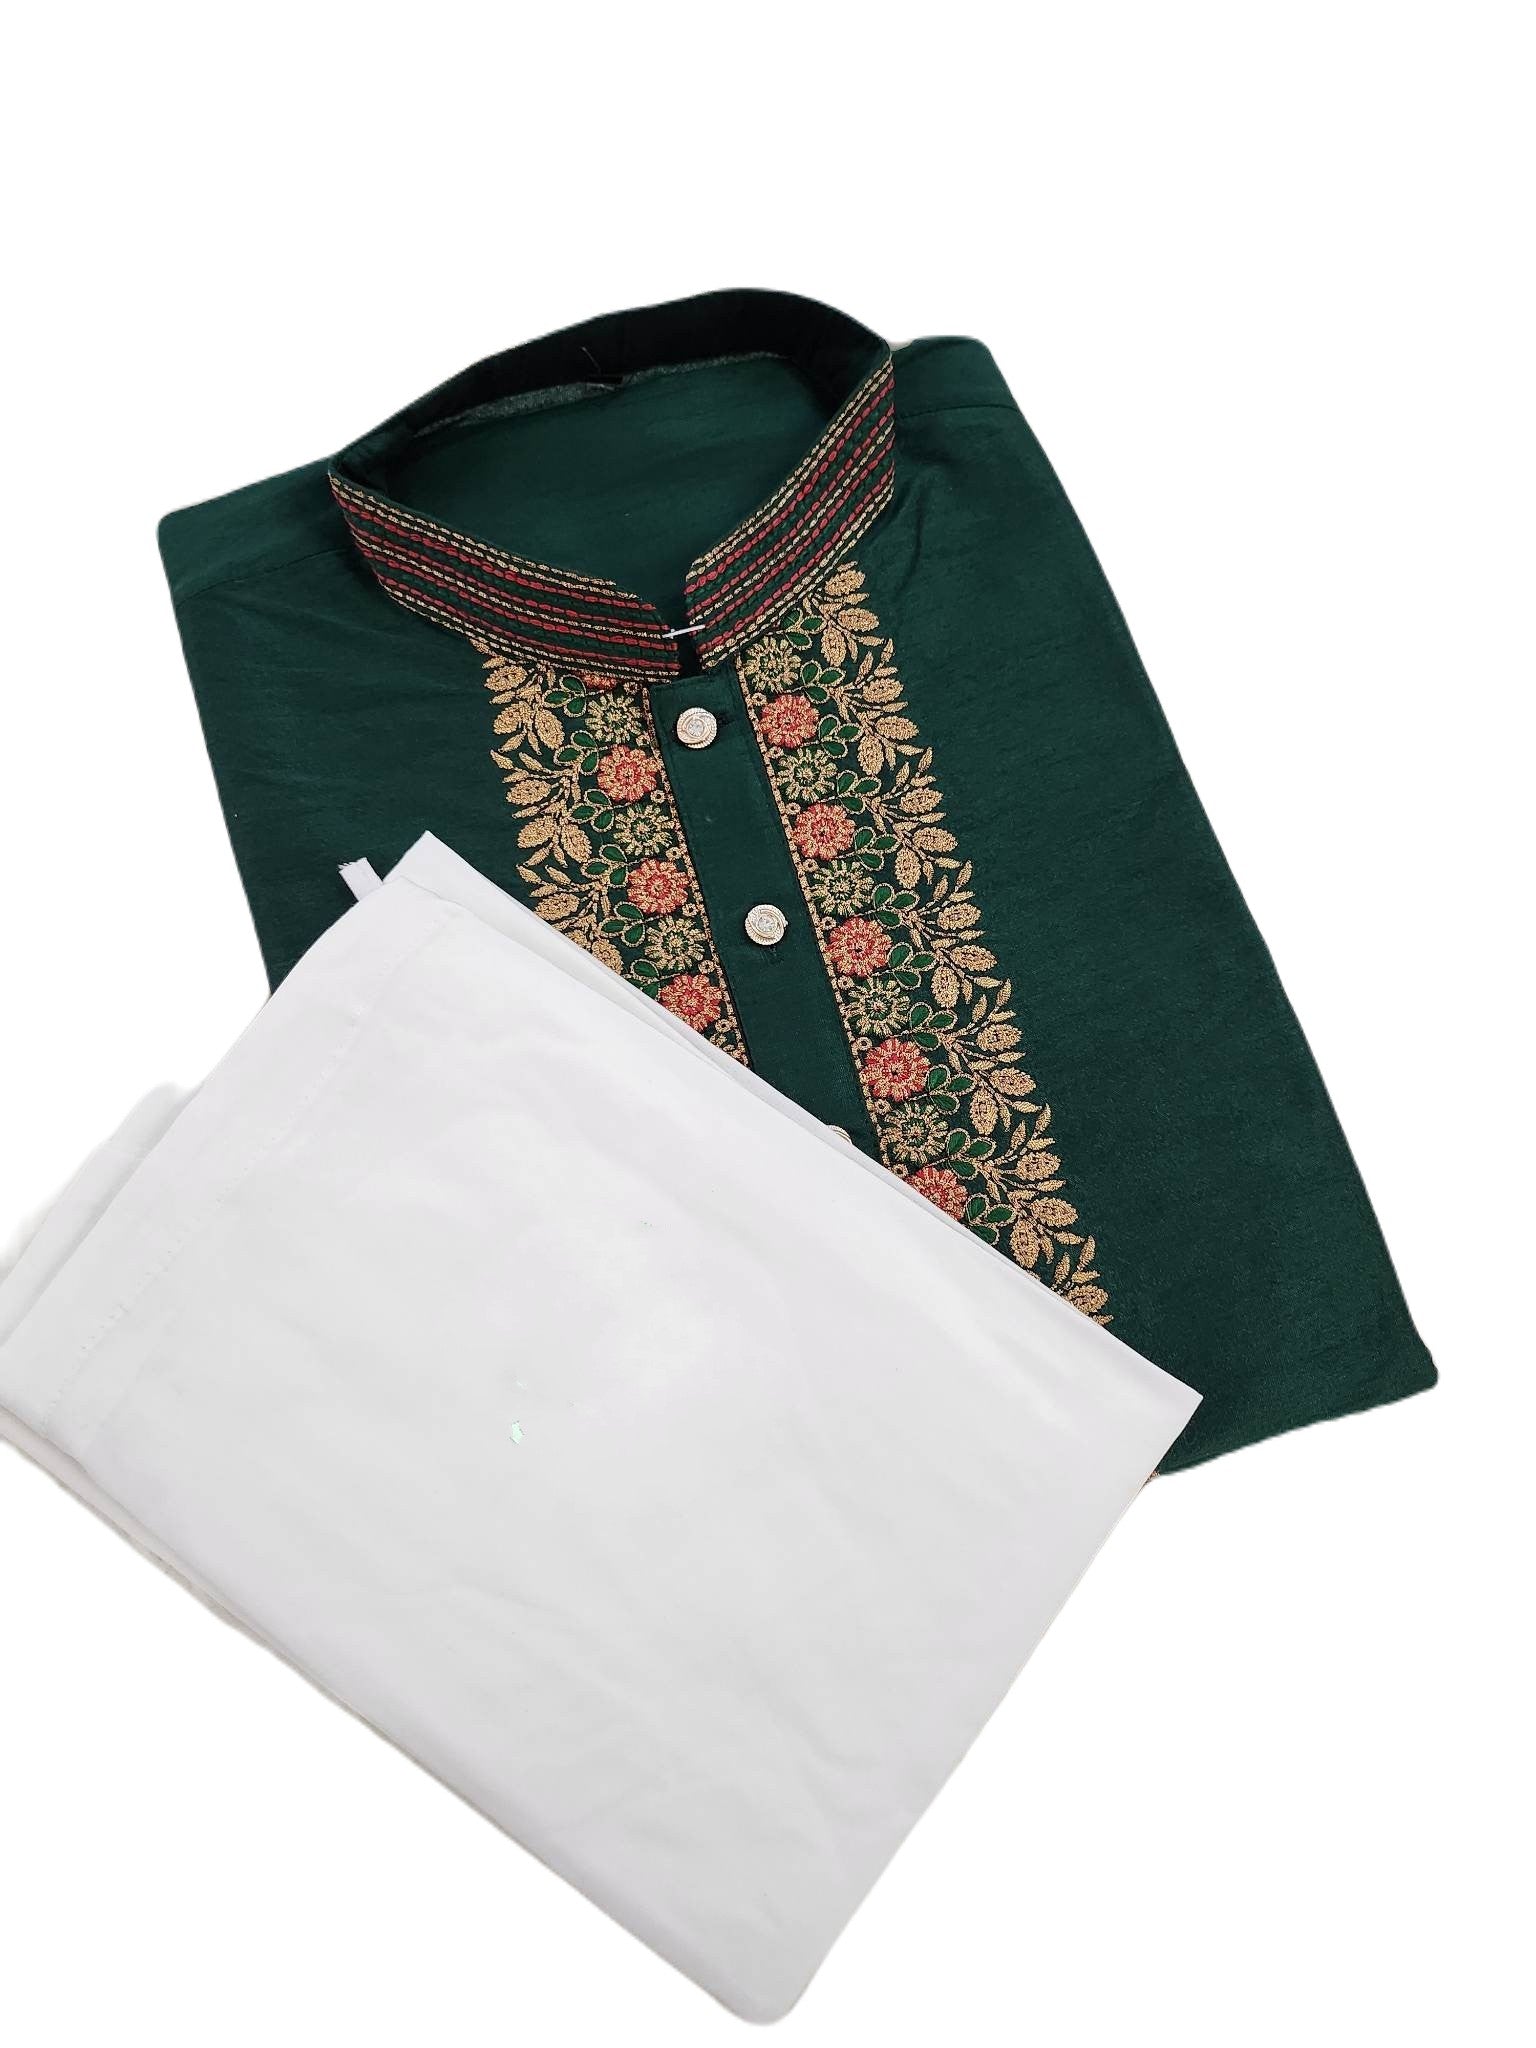 Man's Banglori Silk with Embroidery Design Man's Kurta Pajama Set, KPS-1029